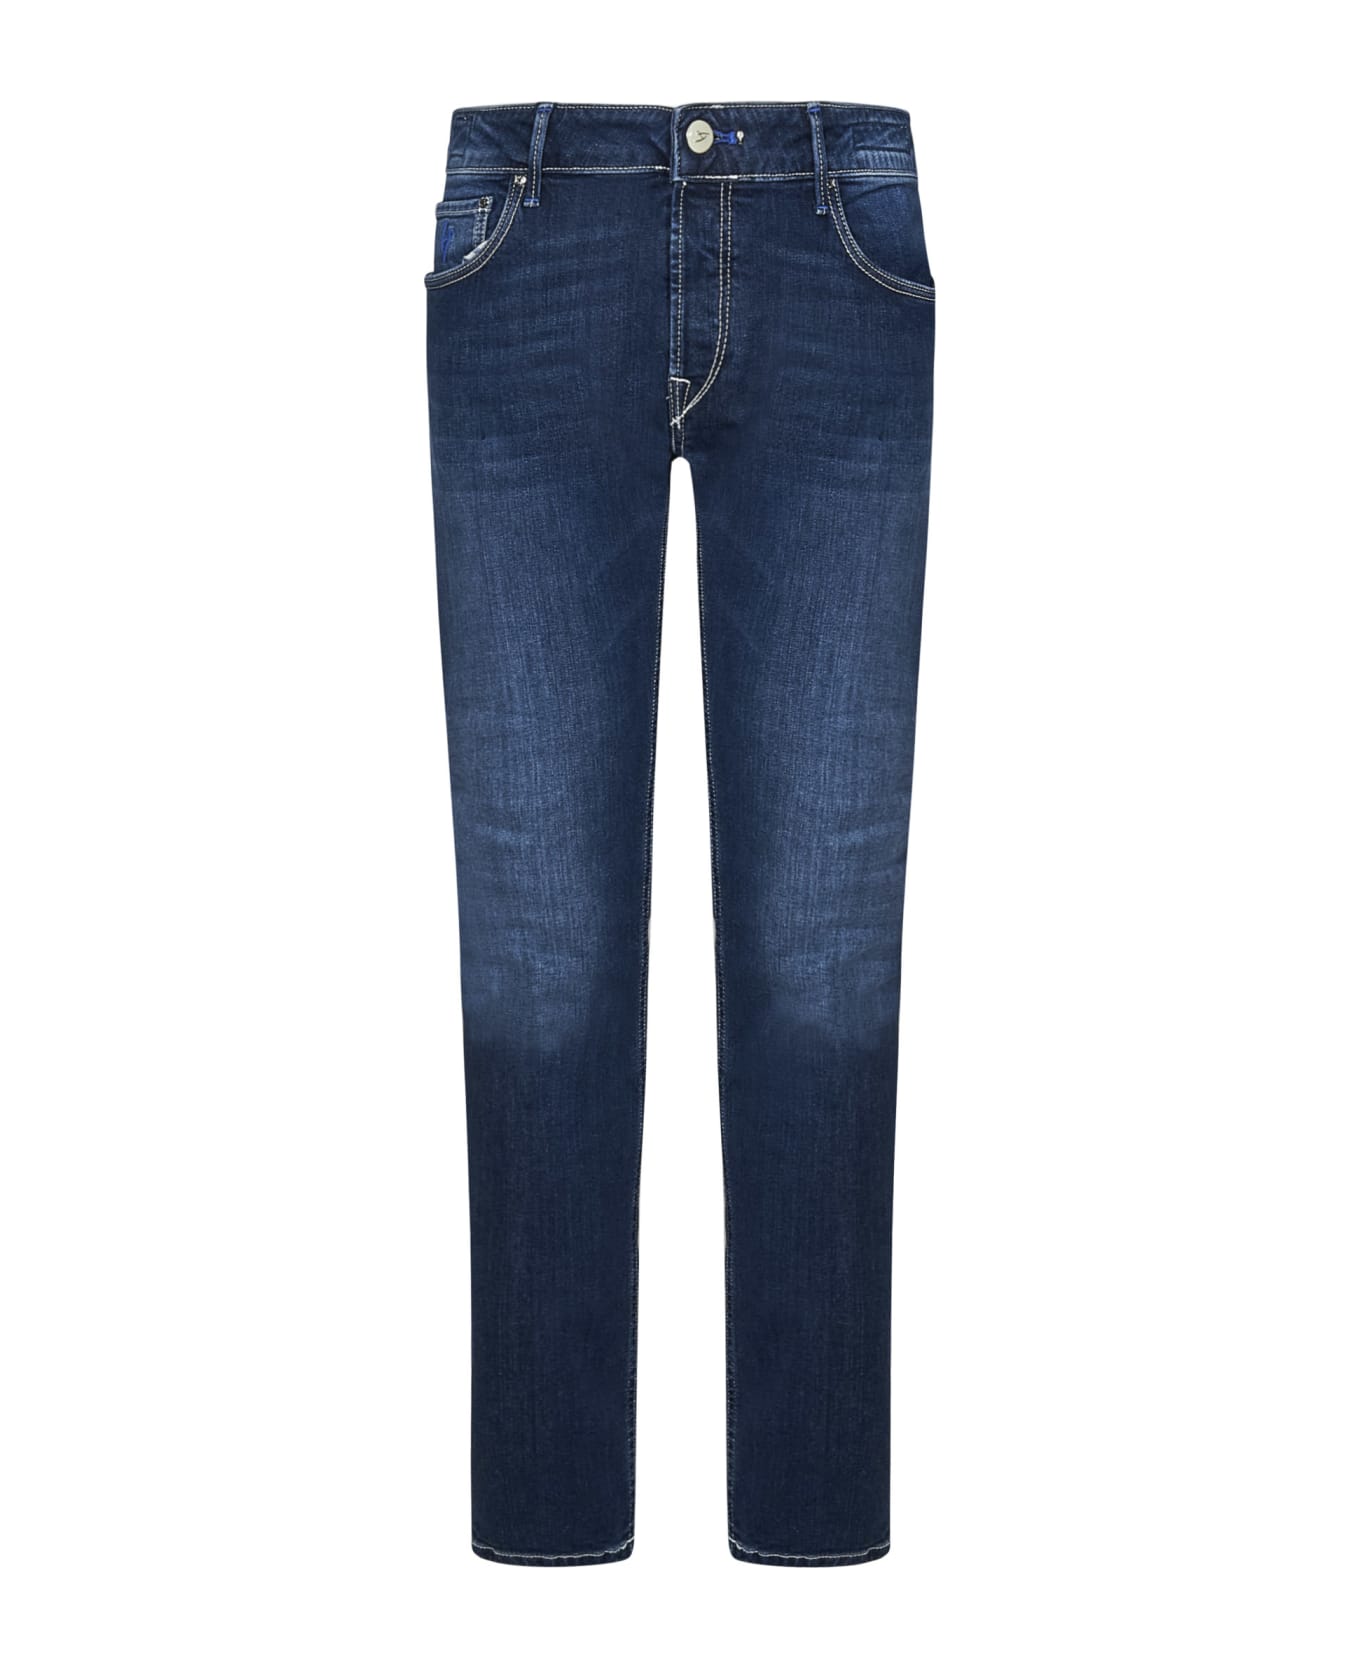 Hand Picked Orvieto Jeans - DENIM BLUE